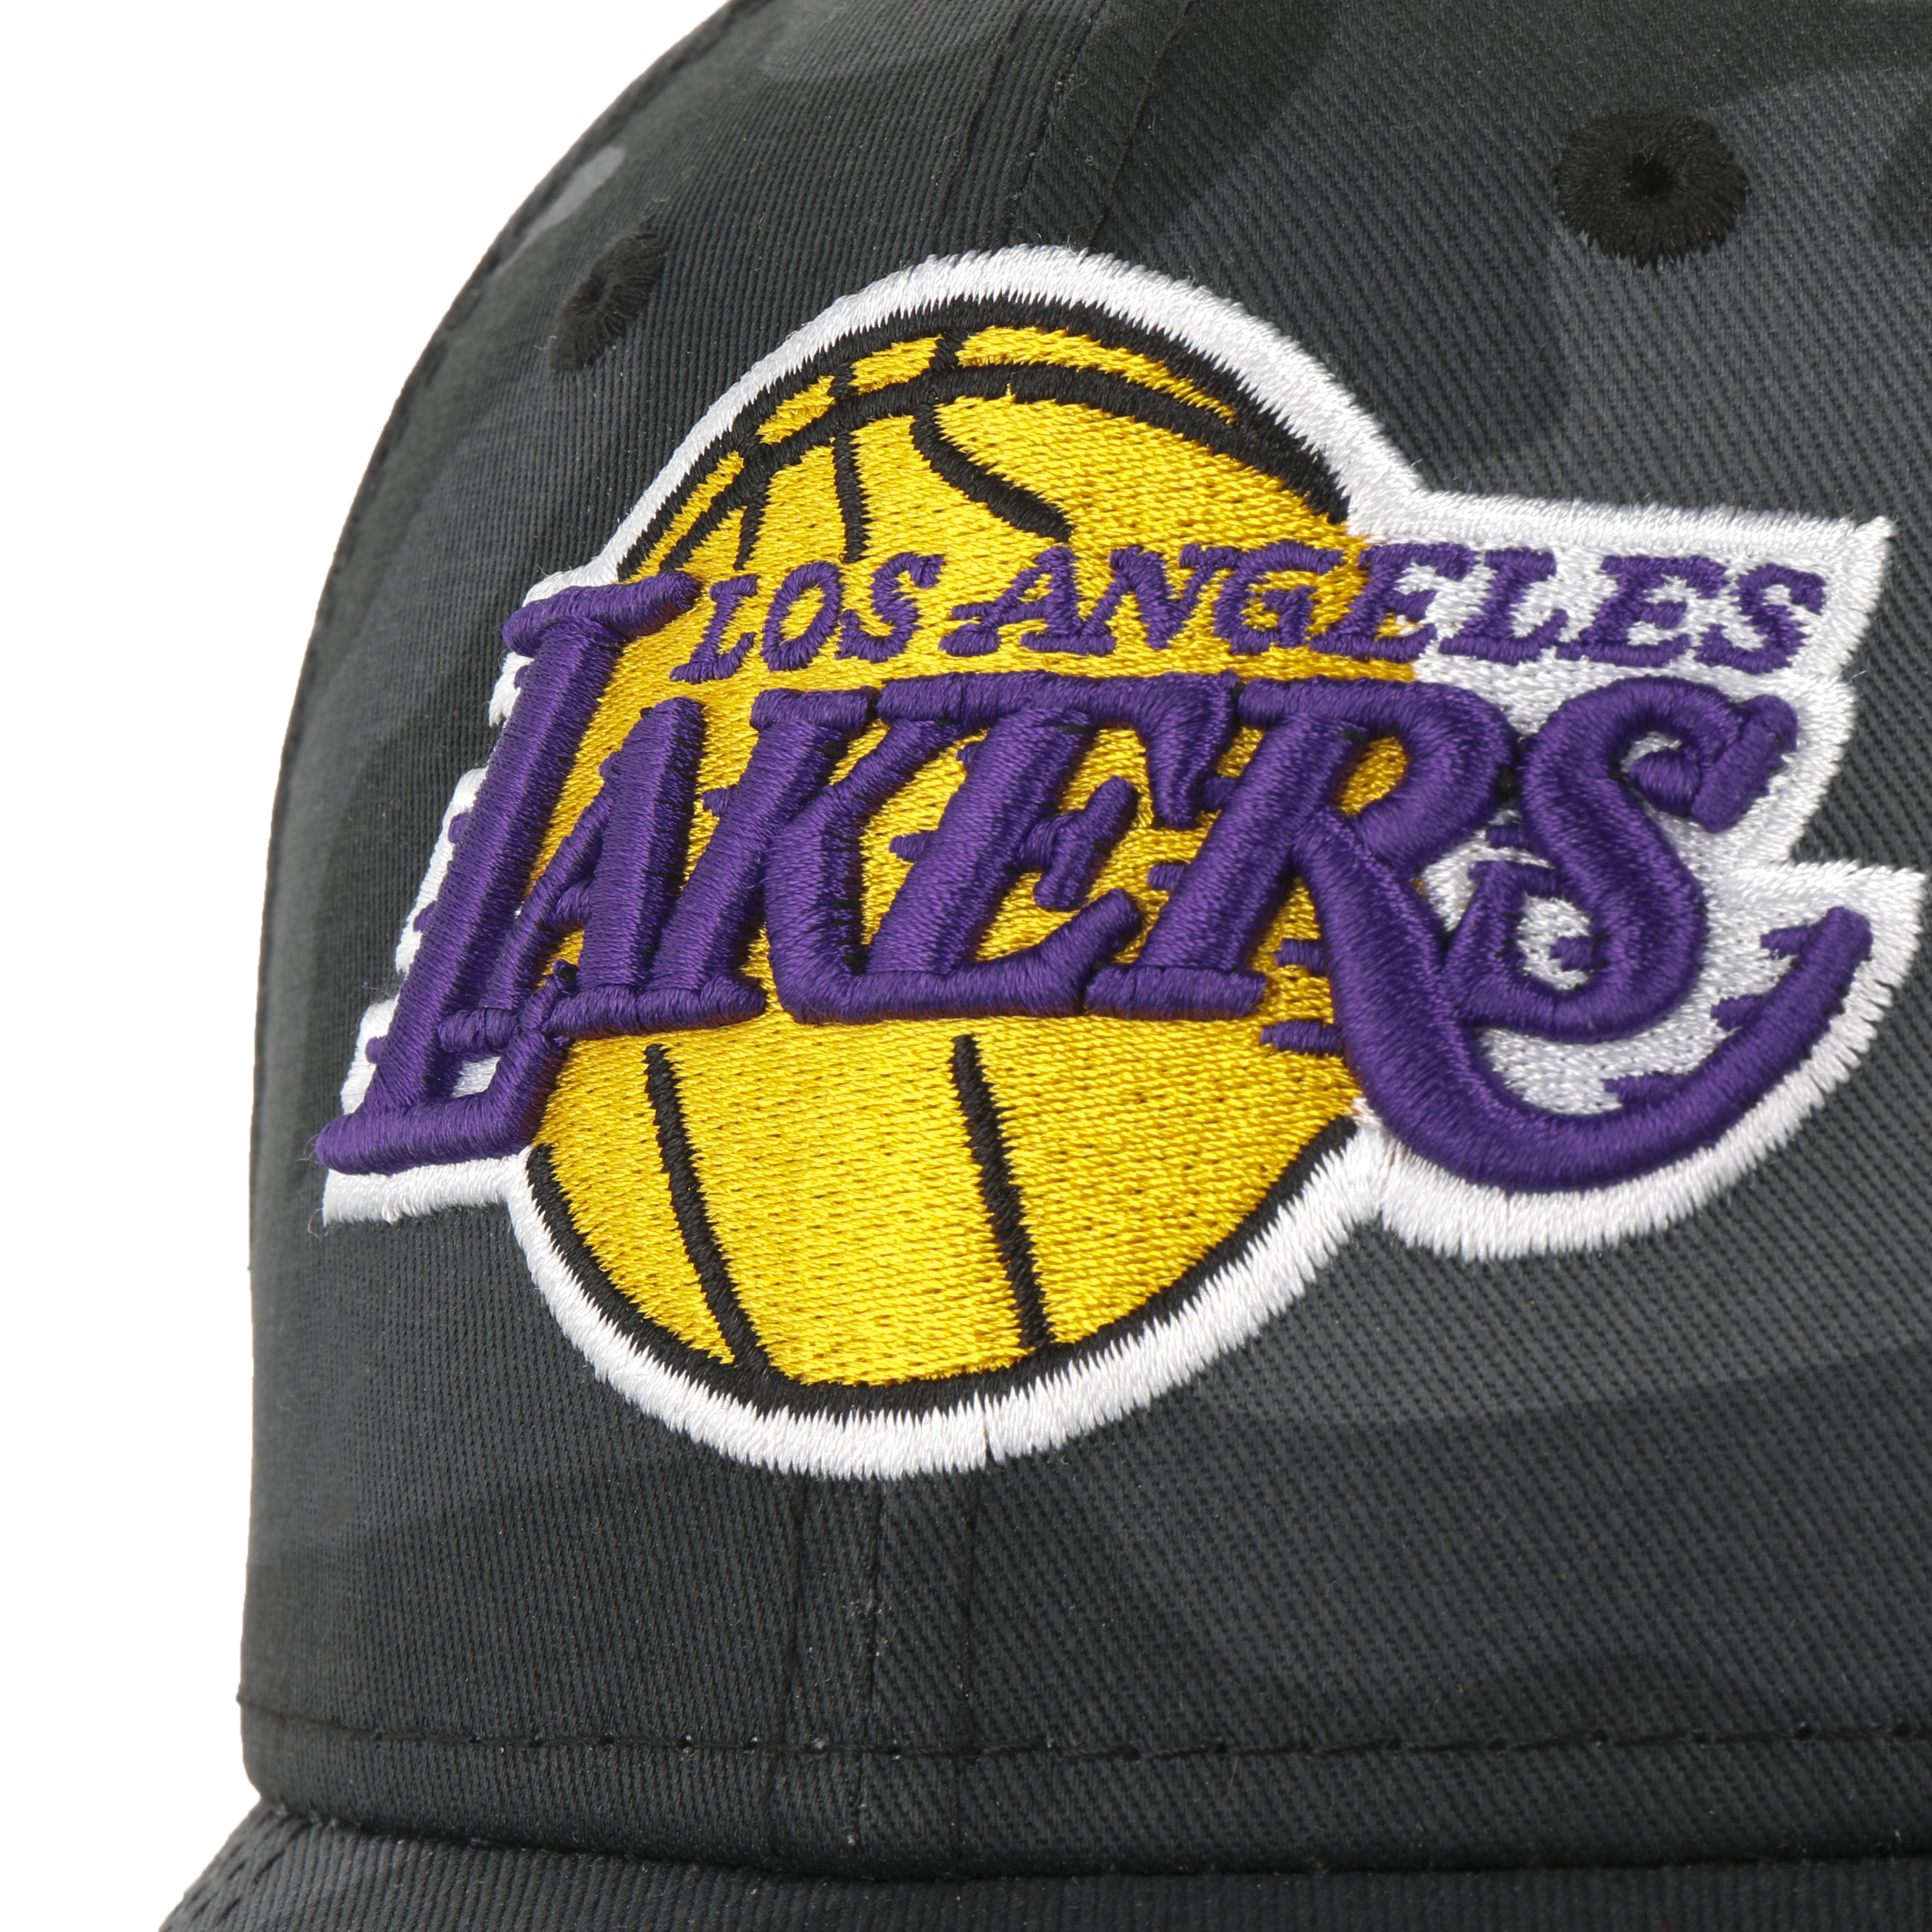 Los Angeles Lakers Dodgers LA Mitchell & Ness Hat Snapback Cap